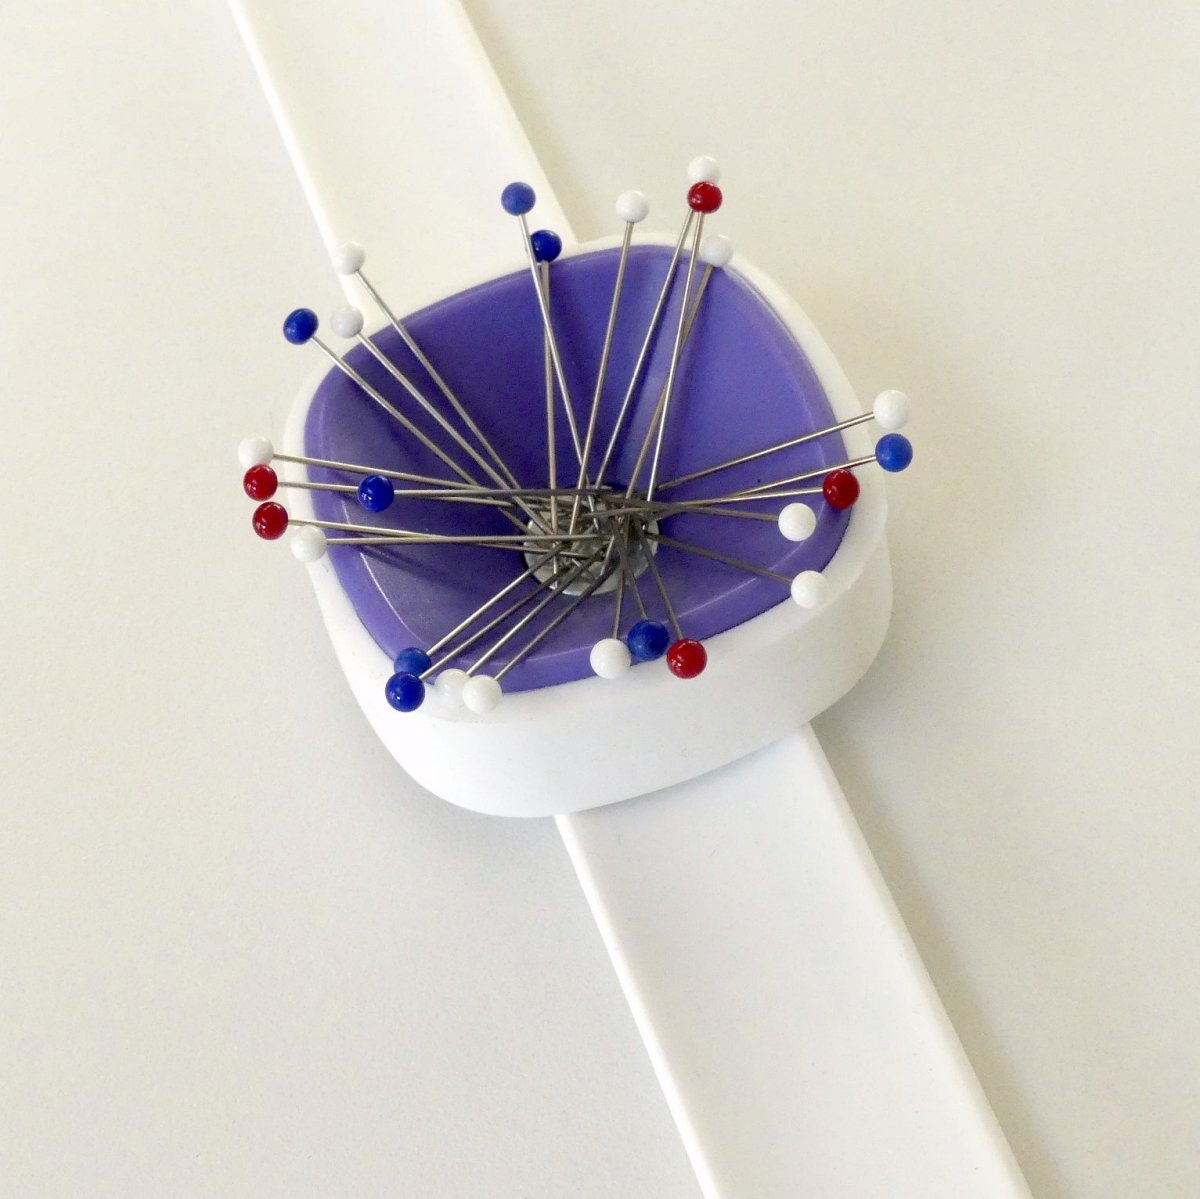 Magnetic Sewing PinCushion Silicone Wrist Needle Pad Safe Bracelet